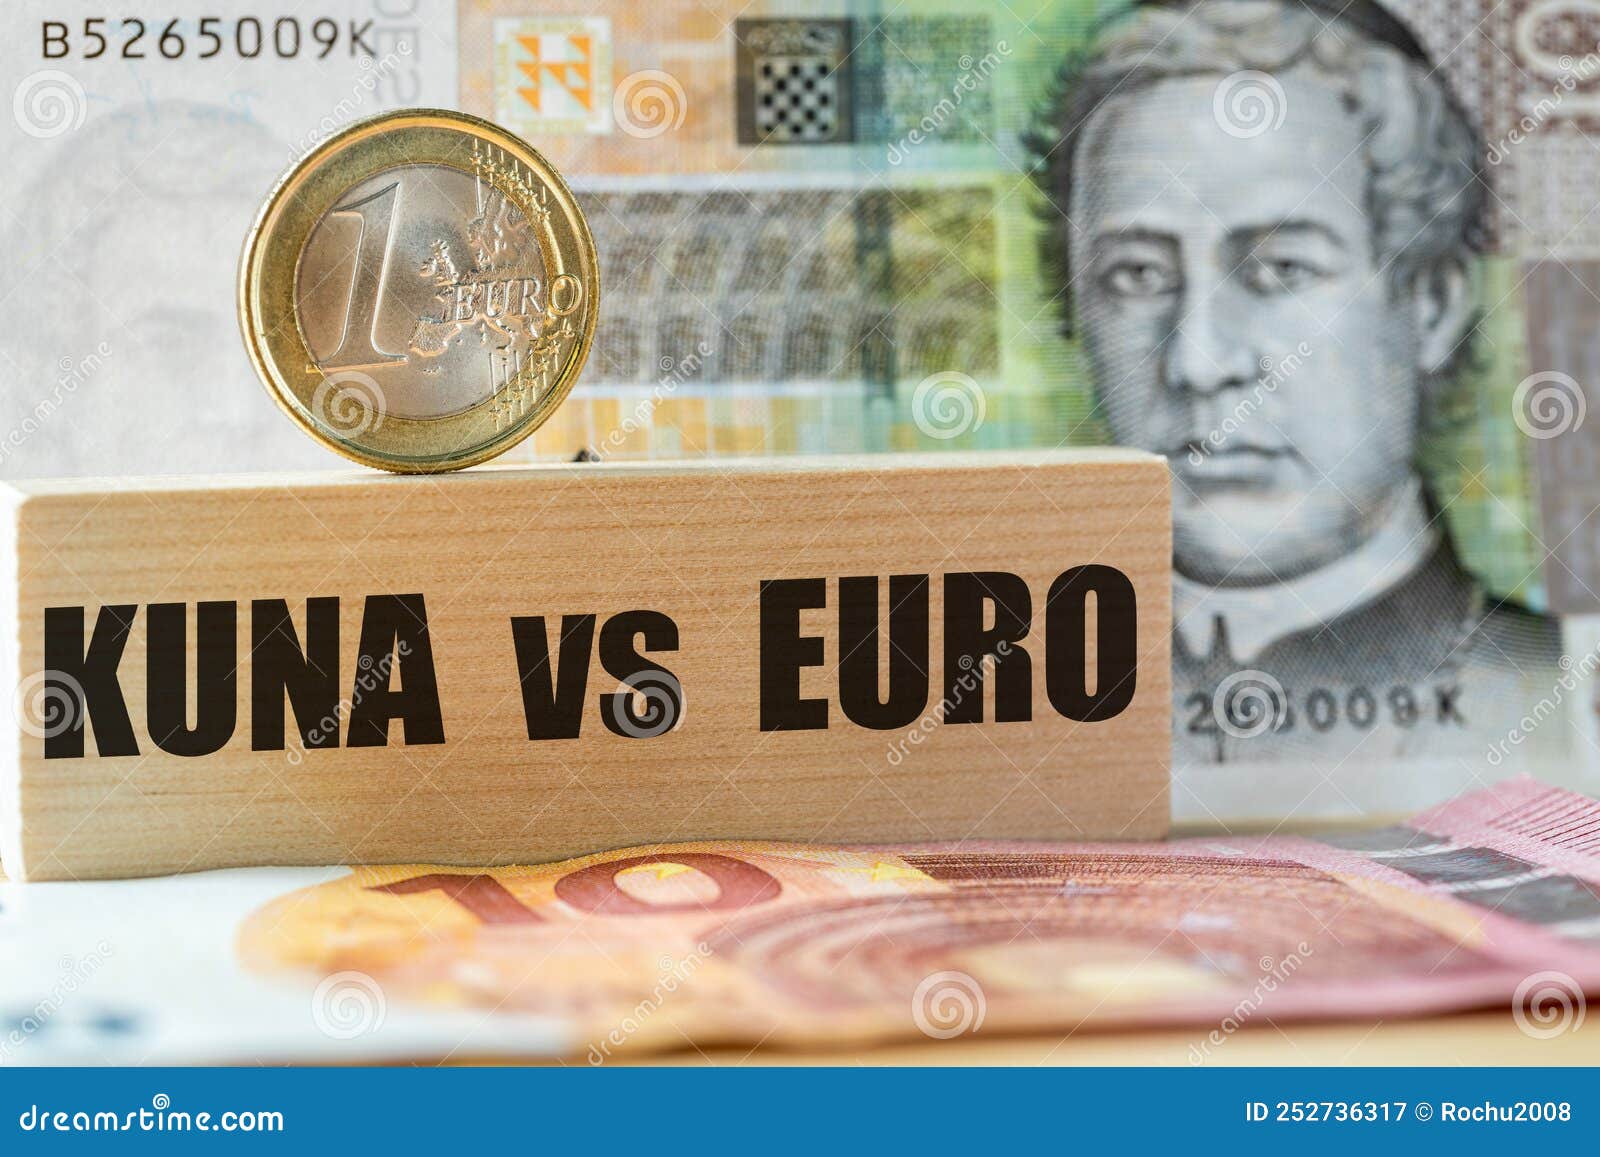 Convert Croatian Kuna to Euro | HRK to EUR currency converter - Valuta EX